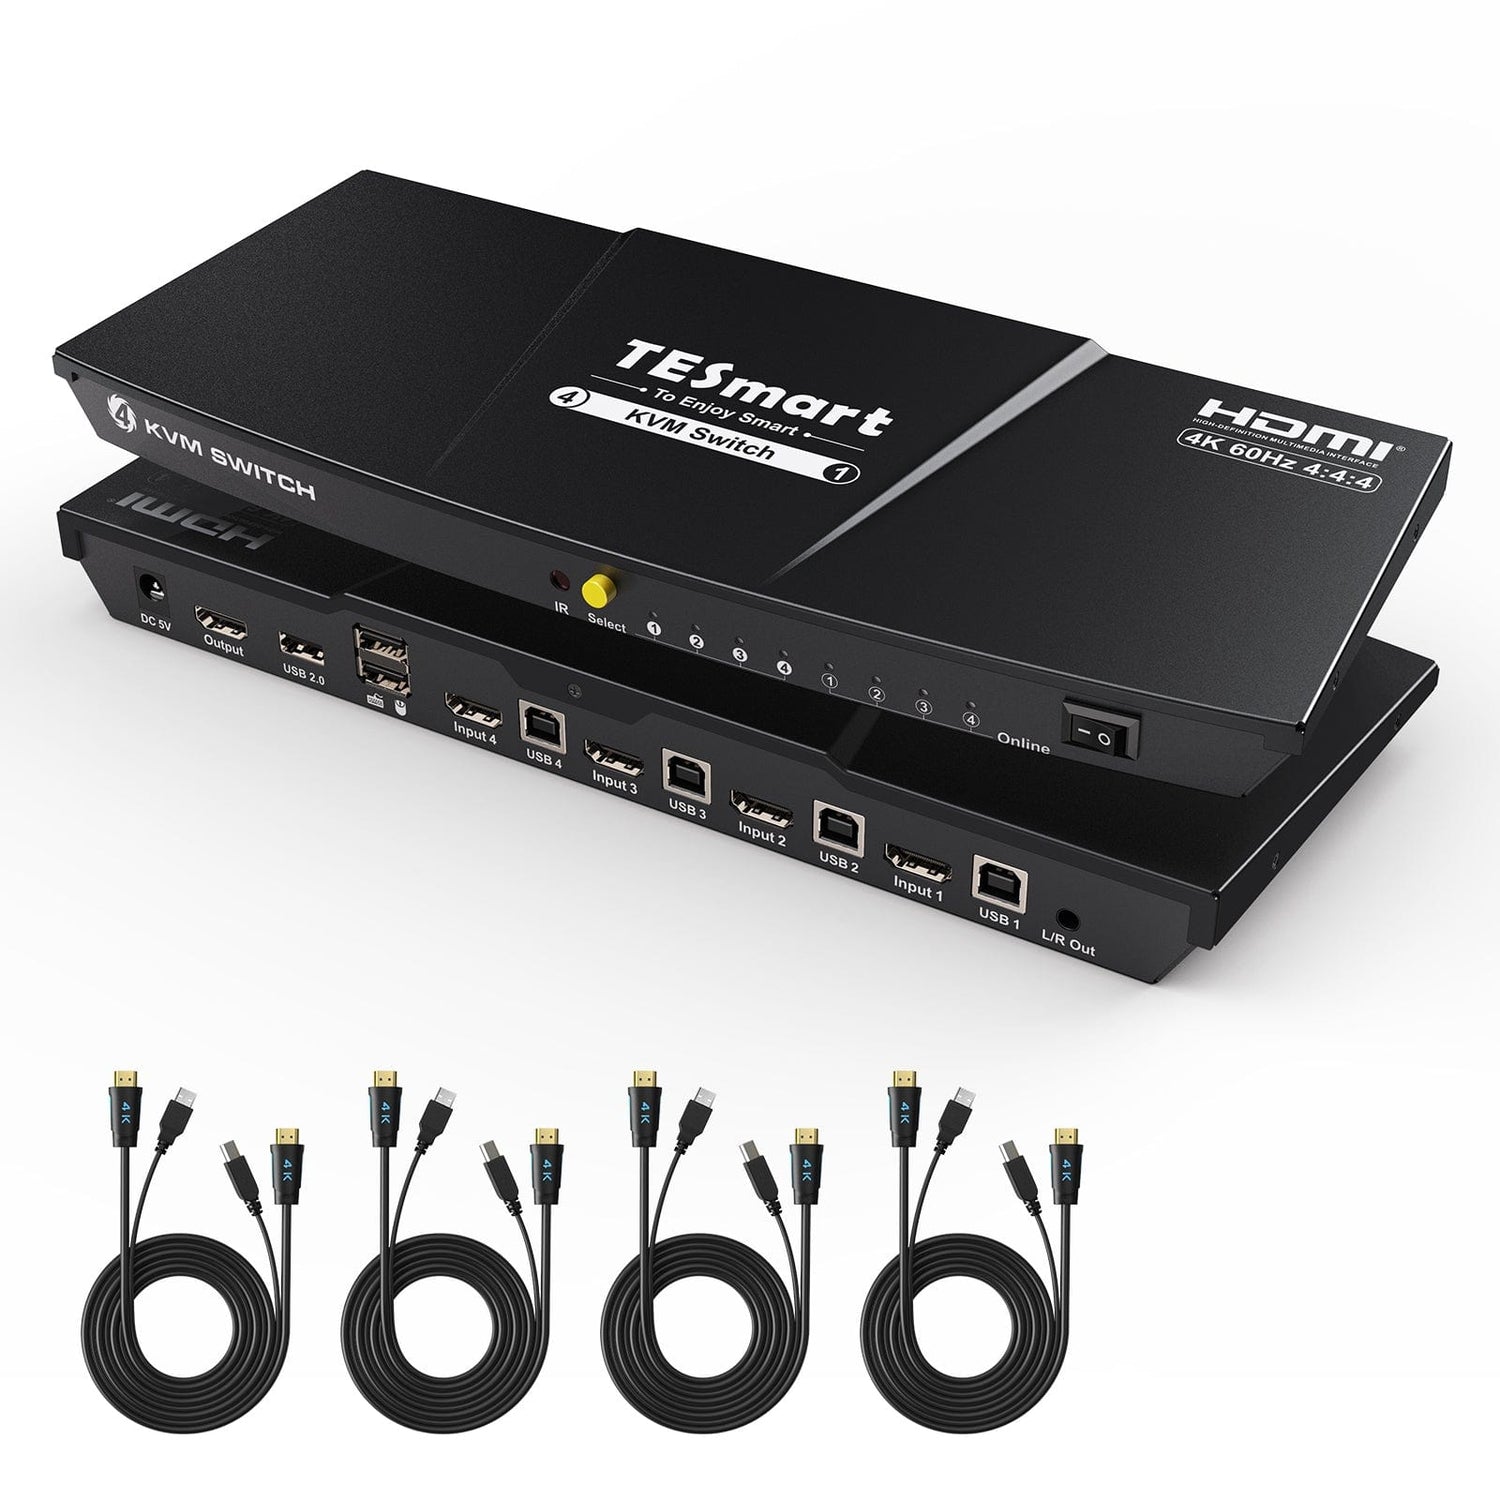 TESmart HKS401-E23-USBK HDMI KVM Switcher 4 Port KVM Switch Kit HDMI 4K60Hz with EDID, 4 PCs 1 Monitor HDMI KVM switch 4 port 4K60Hz with EDID,USB hub TESmart US Plug / Black / 4K60Hz Version with Passthrough (HKS0401A2U)